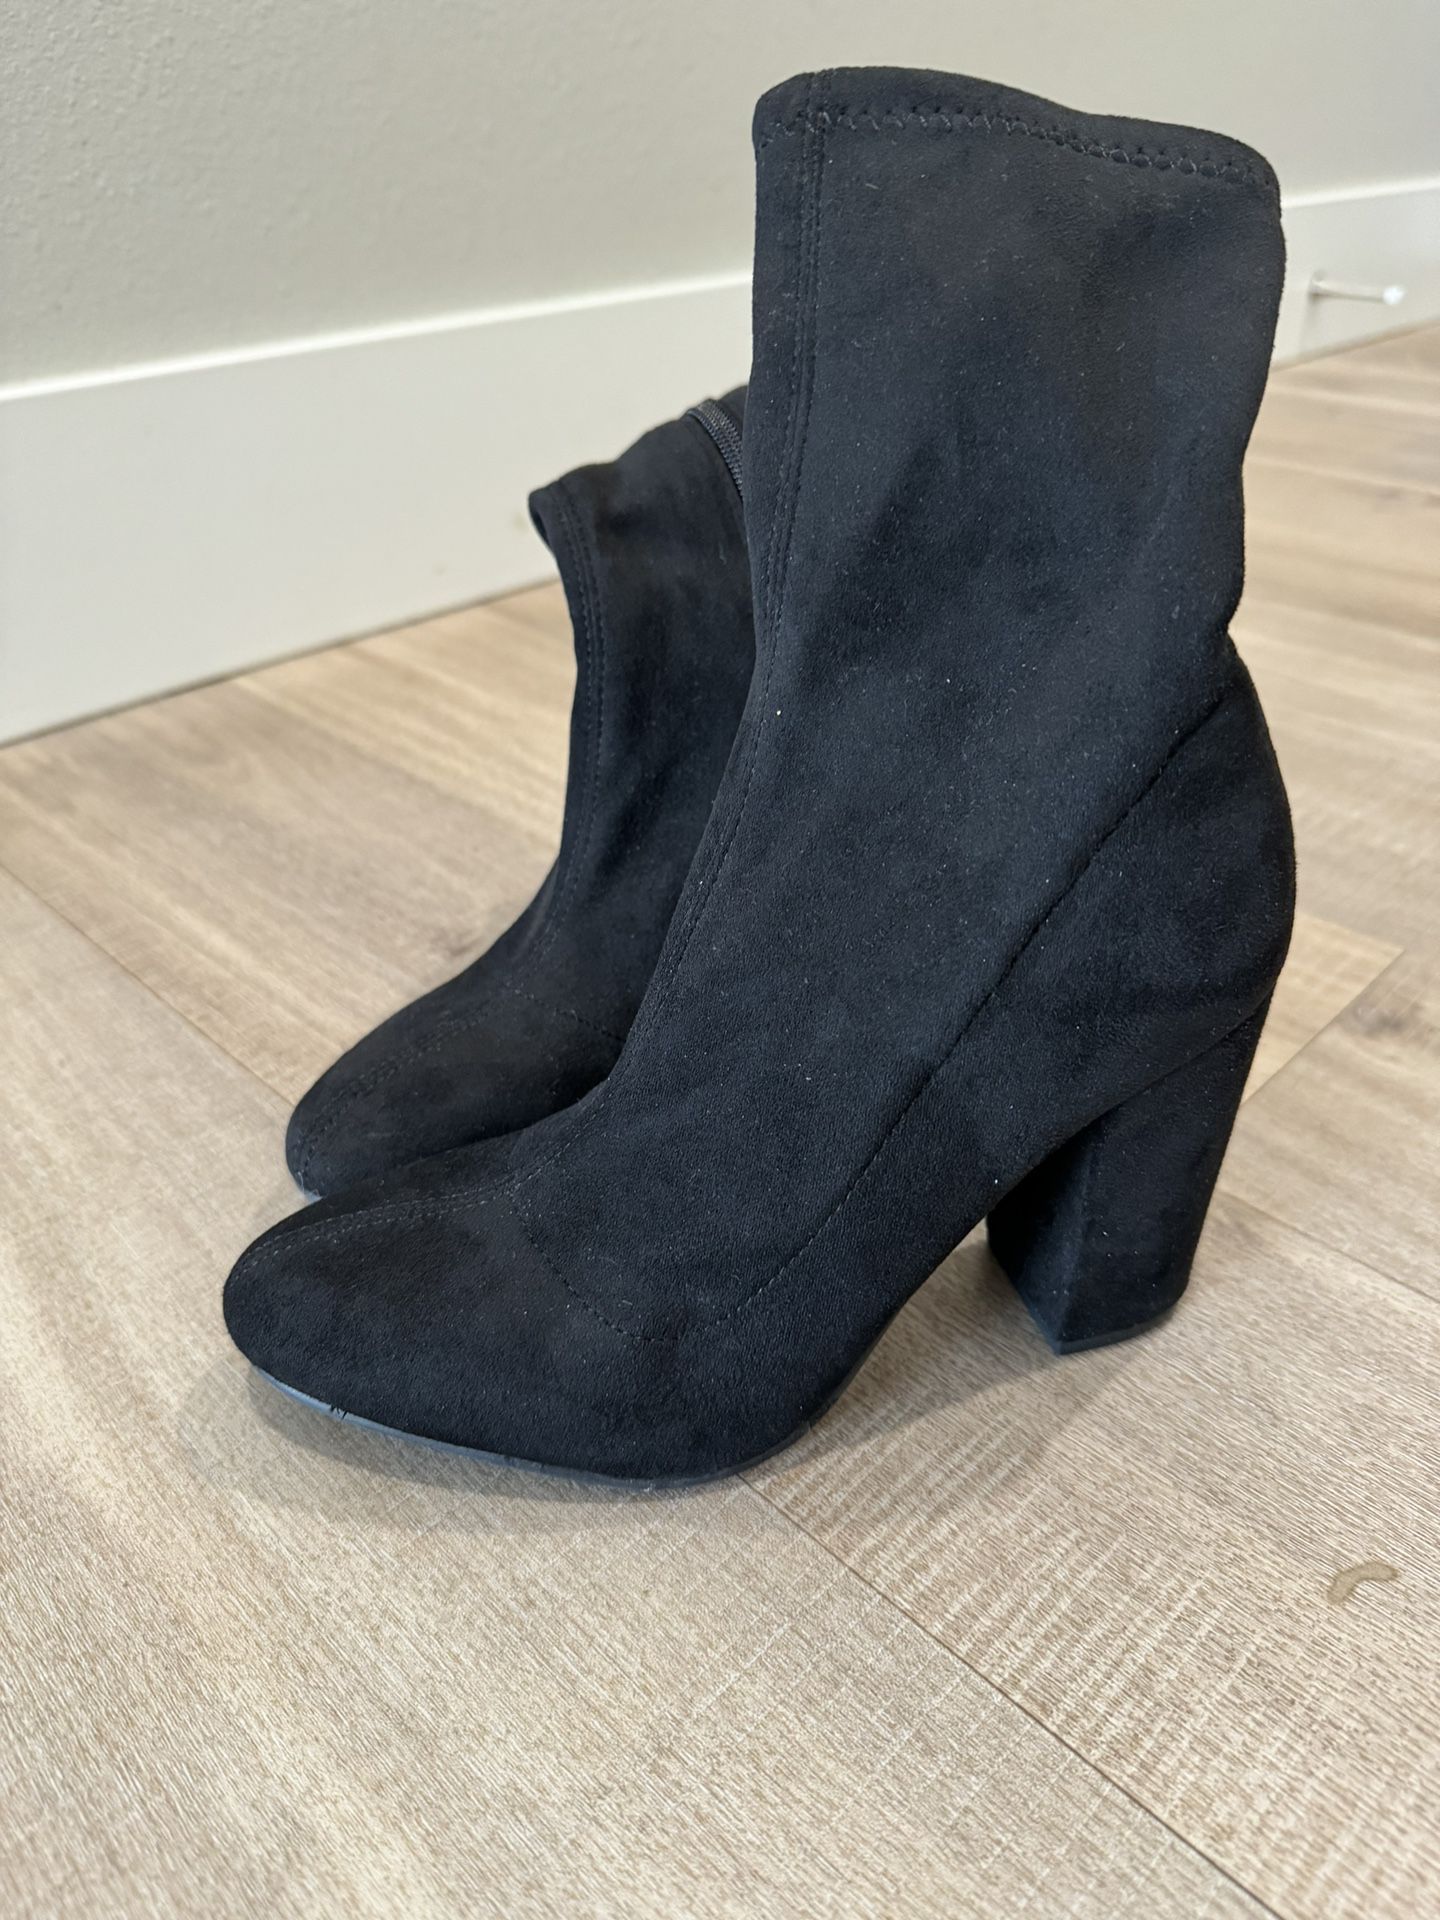 Faux Suede Block Heel Boots Size 7 (Black)